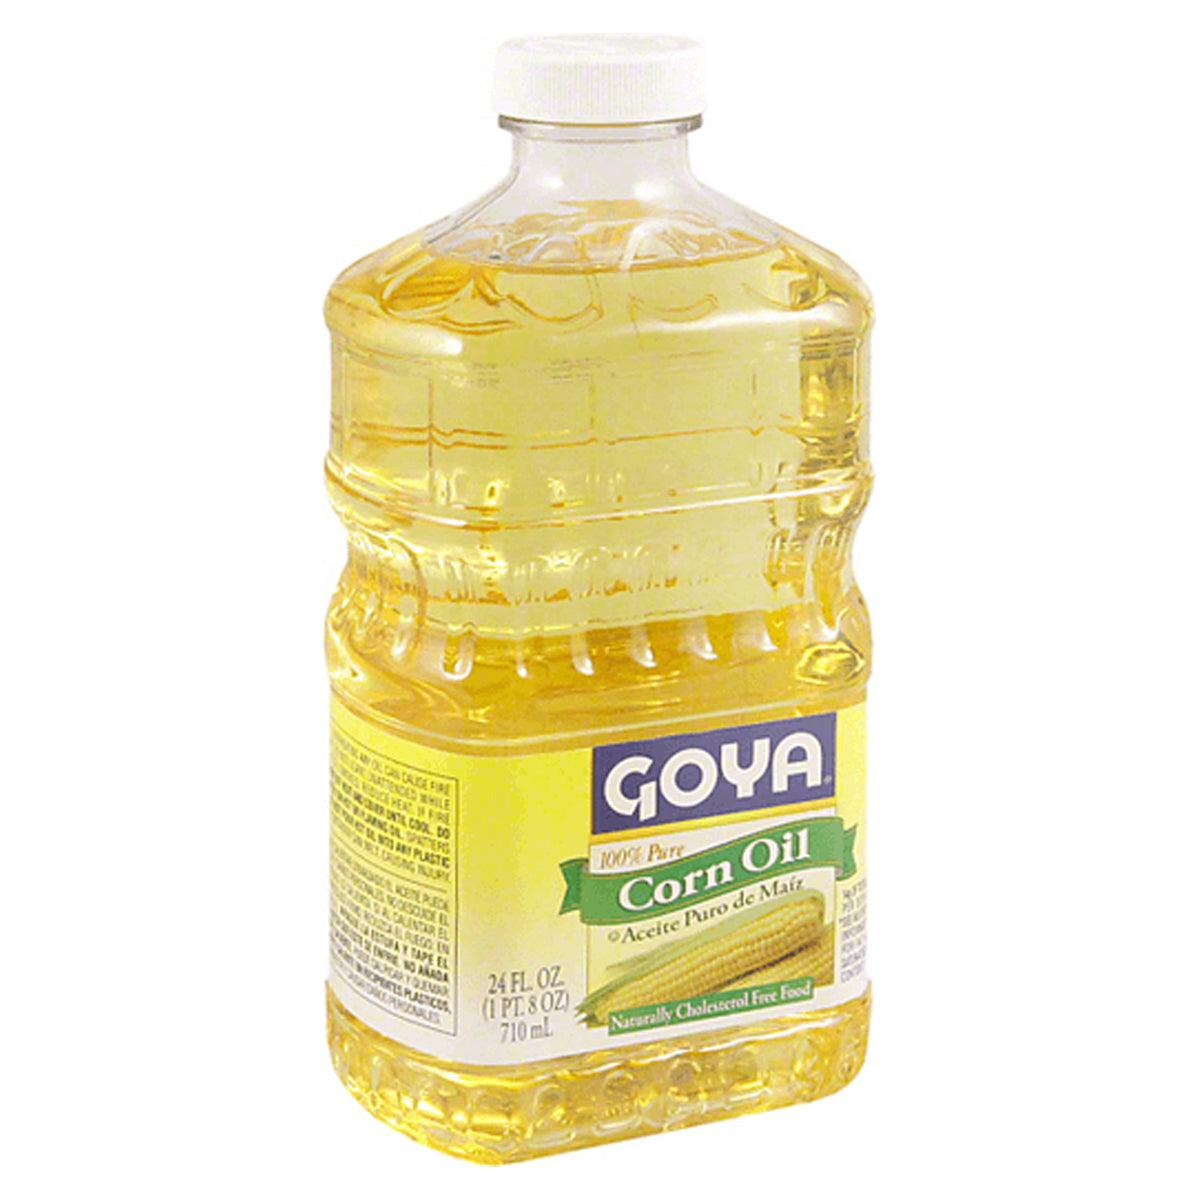 Goya Pure Corn Oil 24floz